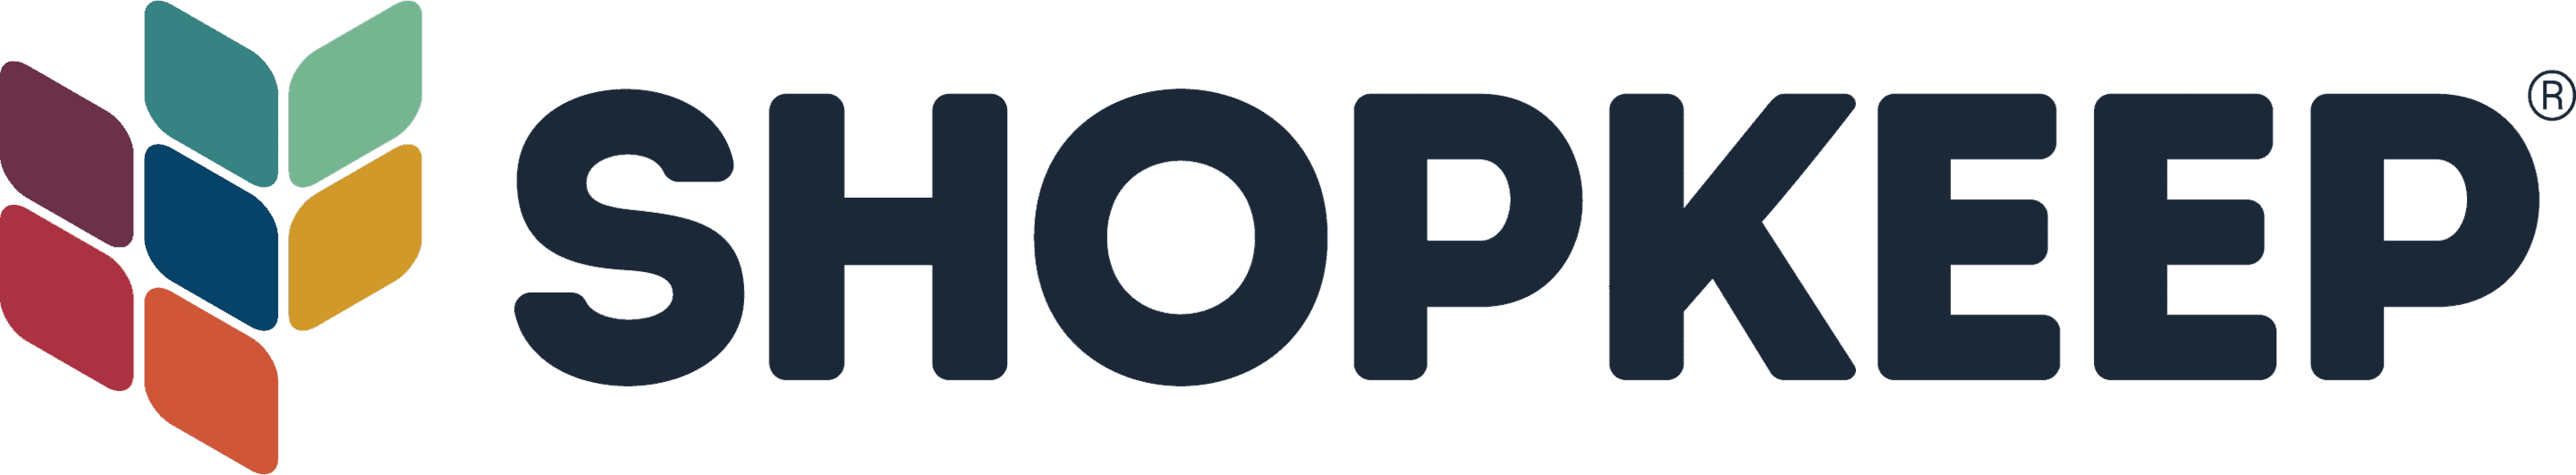 https://www.hostmerchantservices.com/wp-content/uploads/2014/09/shopkeep_logo.png